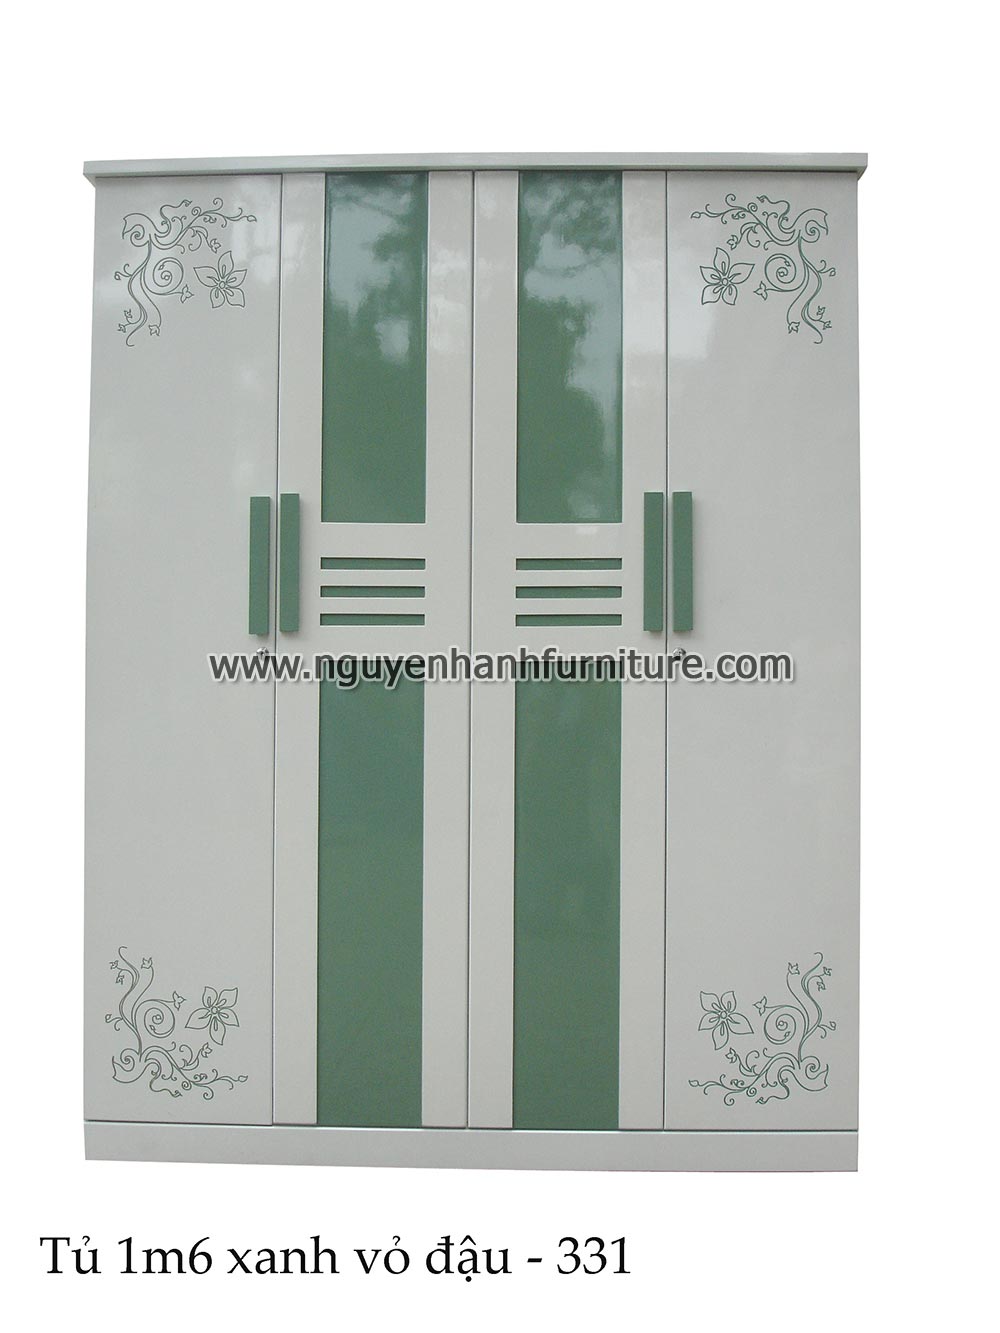 Name product: 1m6 Wardrobe with green pea color - Dimensions: 60 x 160 x 210cm - Description: MDF 